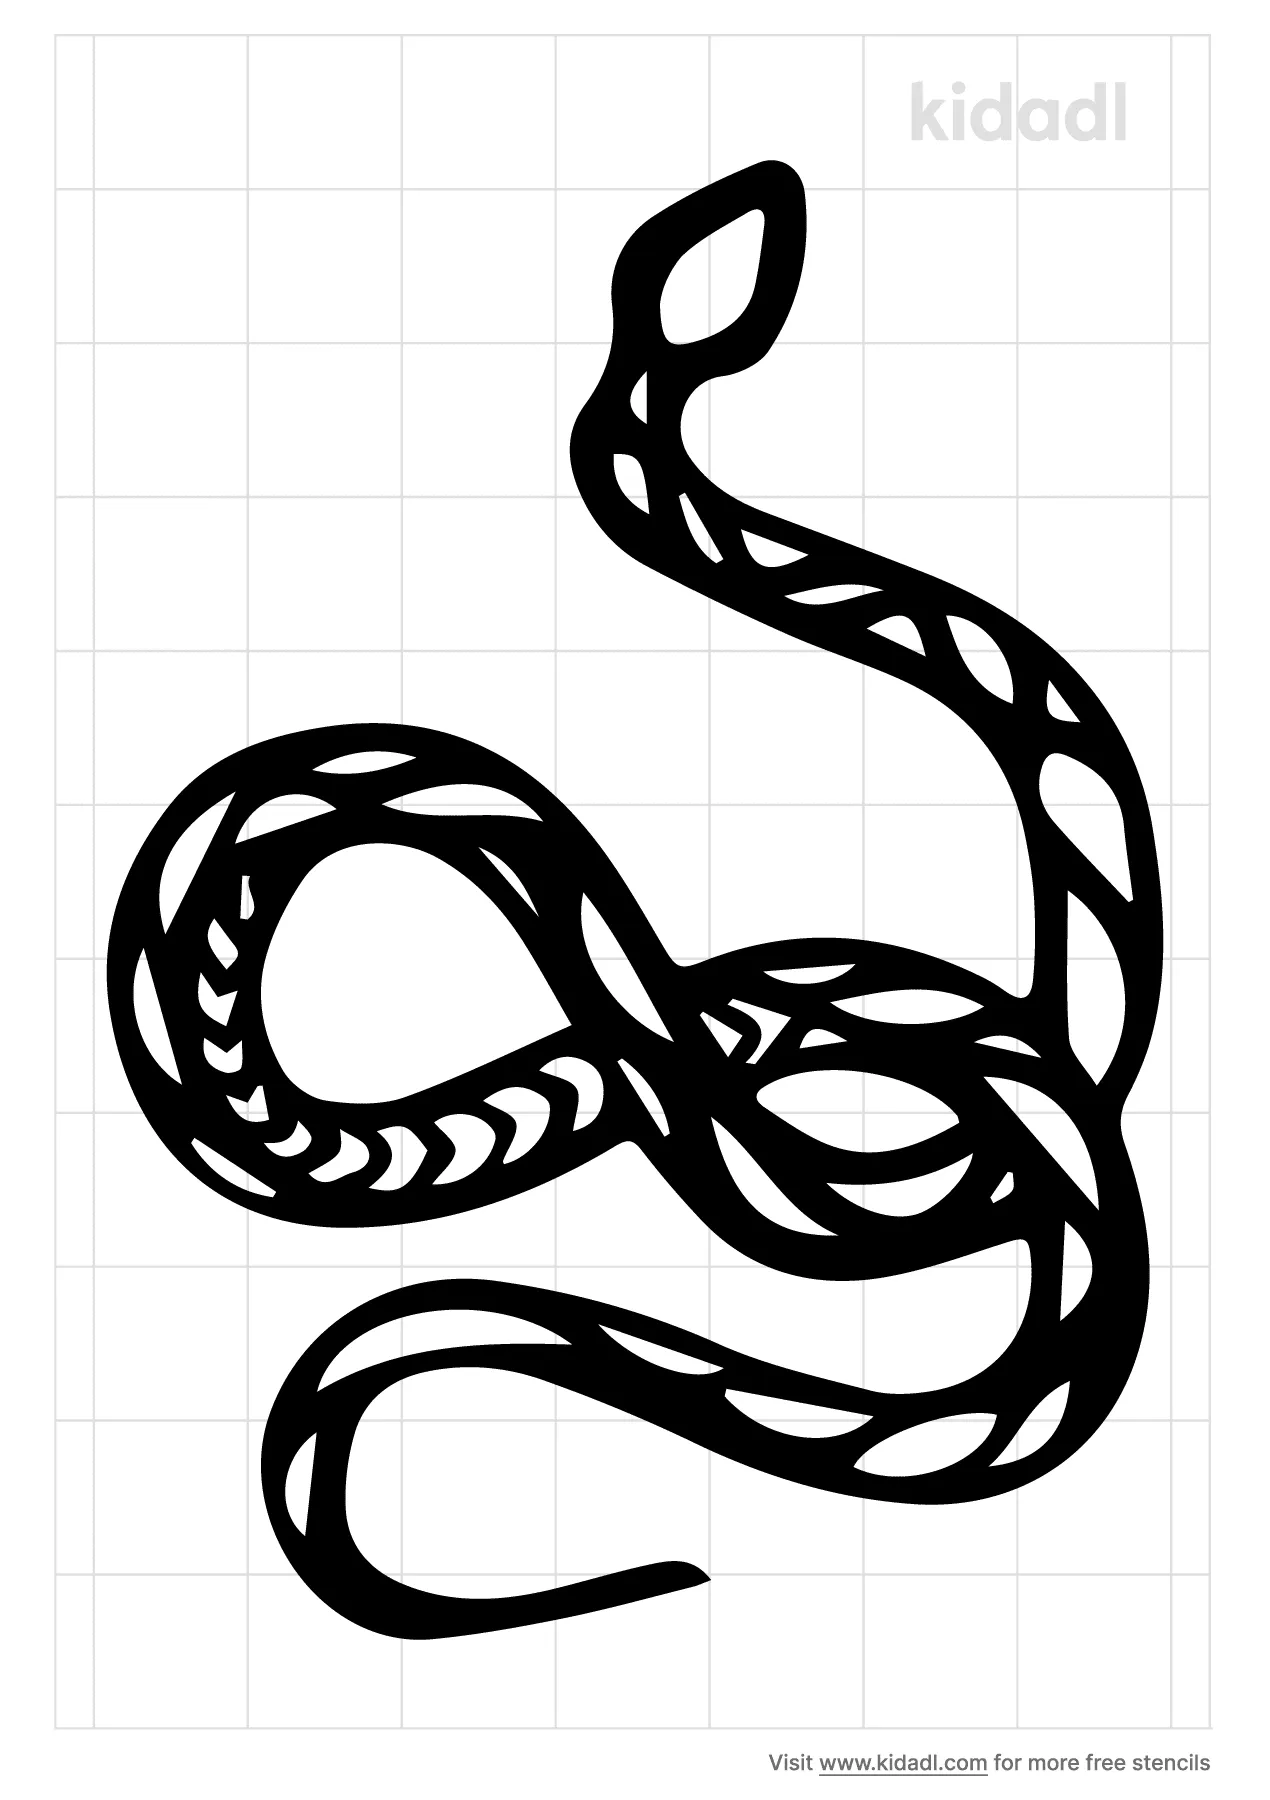 Free Geometric Snake Tattoo Stencil | Stencil Printables | Kidadl